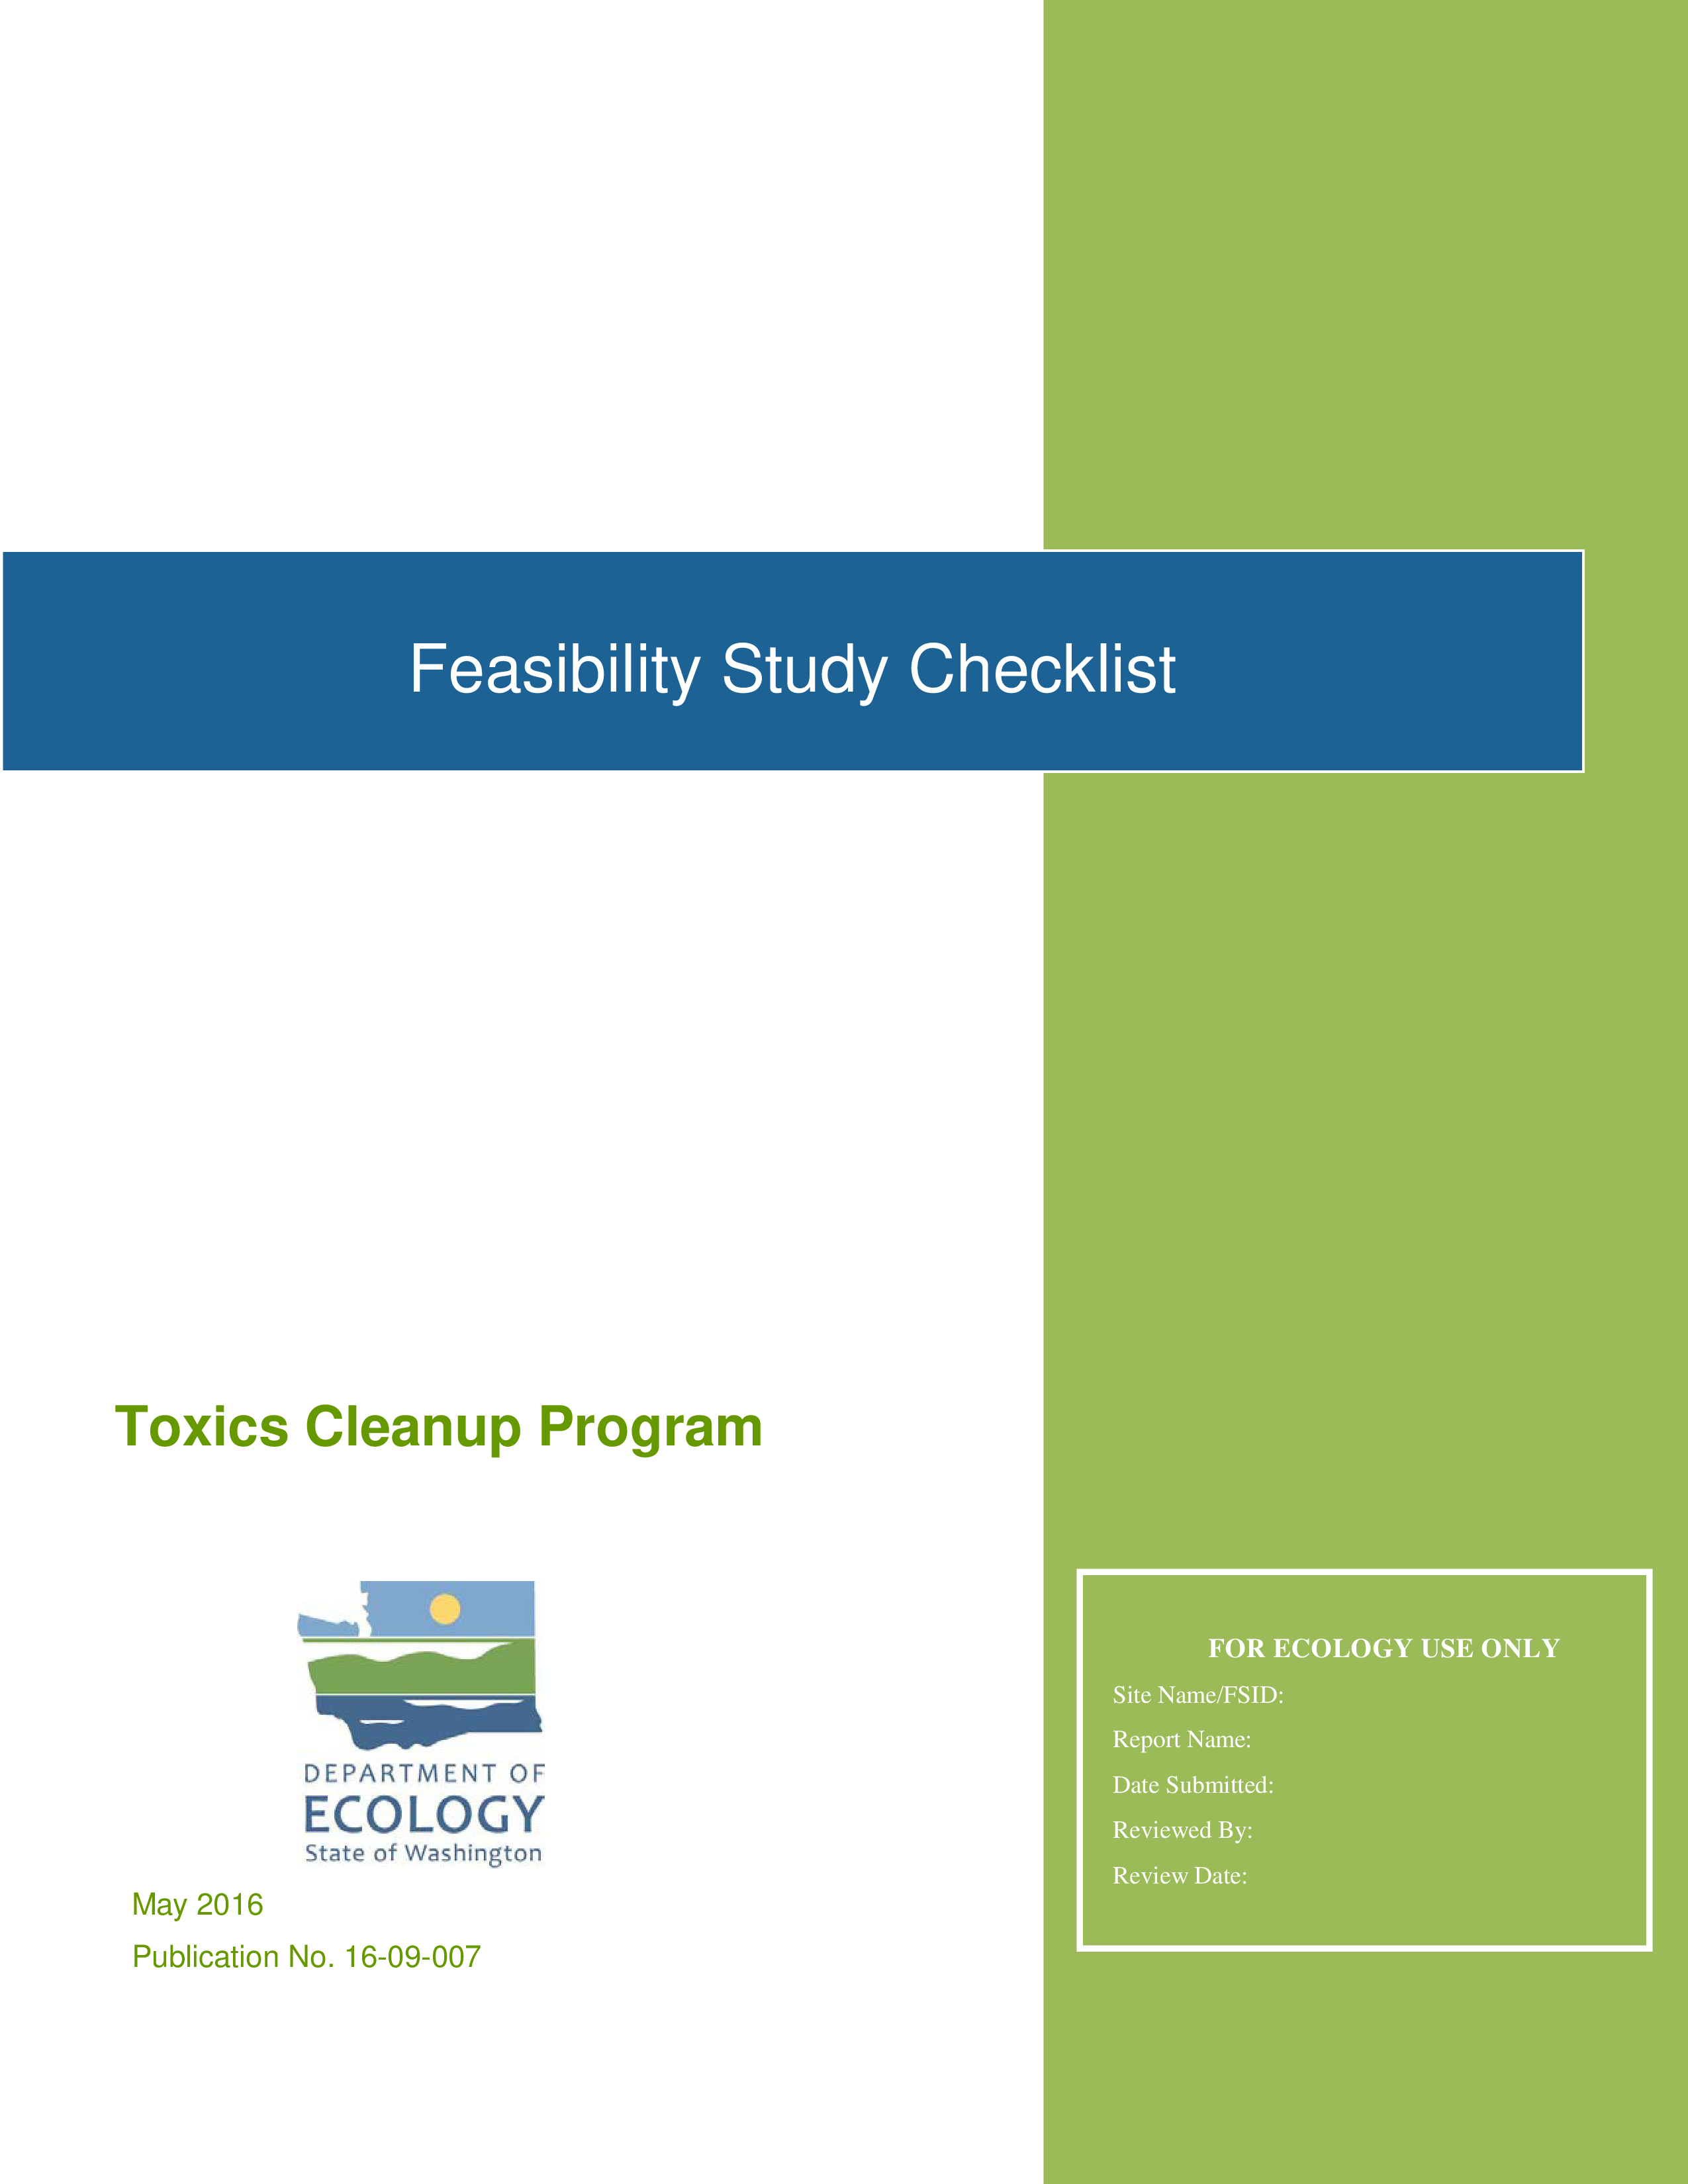 Feasibility Study Checklist main image